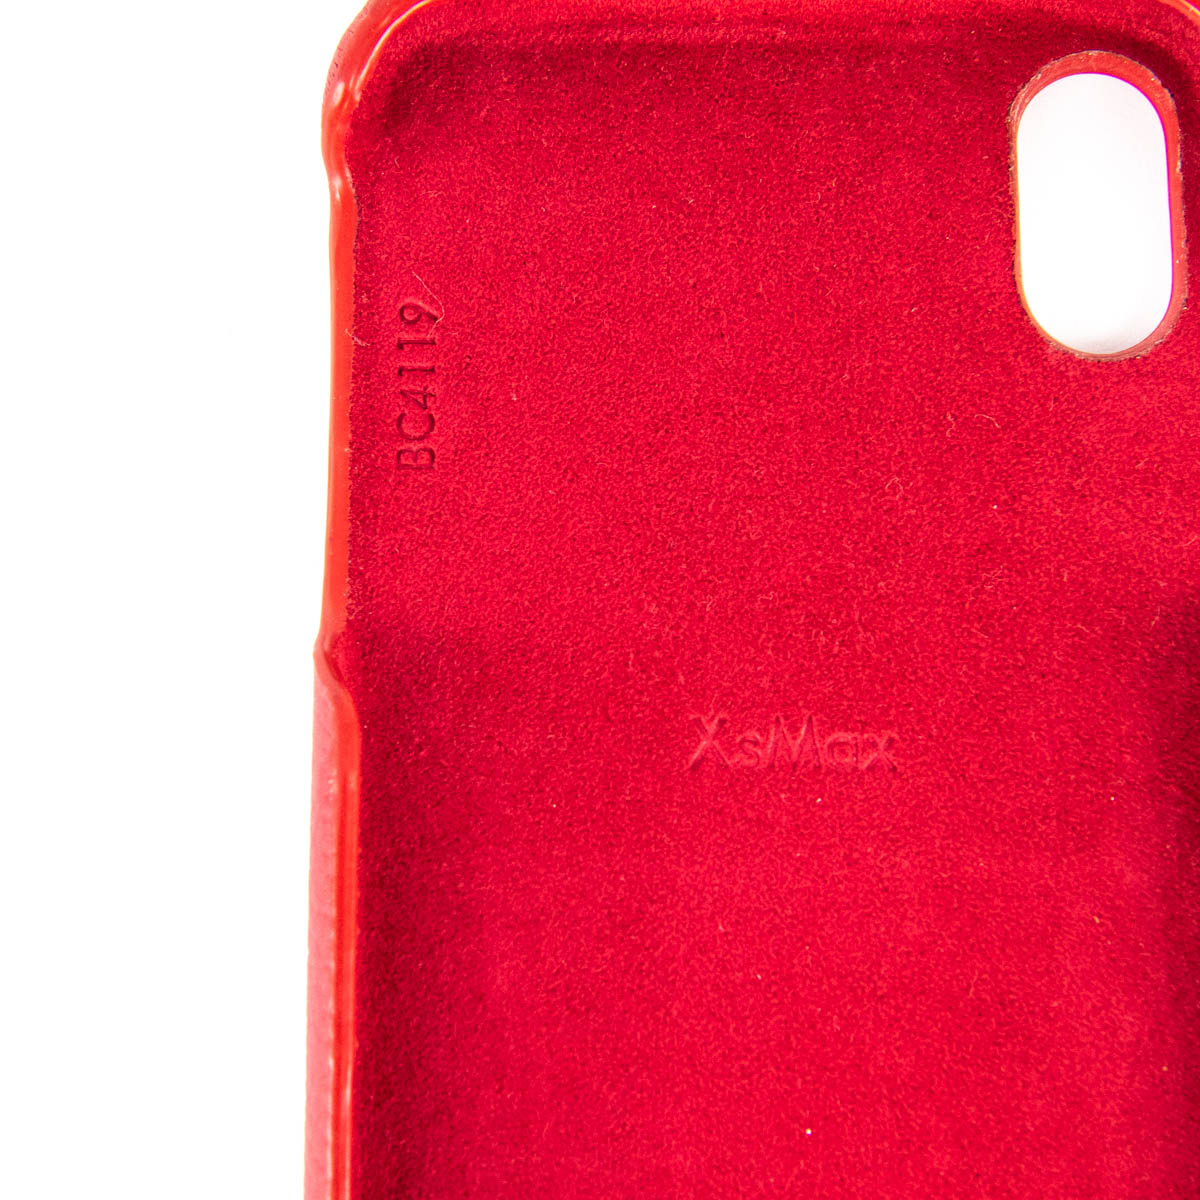 LOUIS VUITTON X/Xs scarlet Iphone ケース